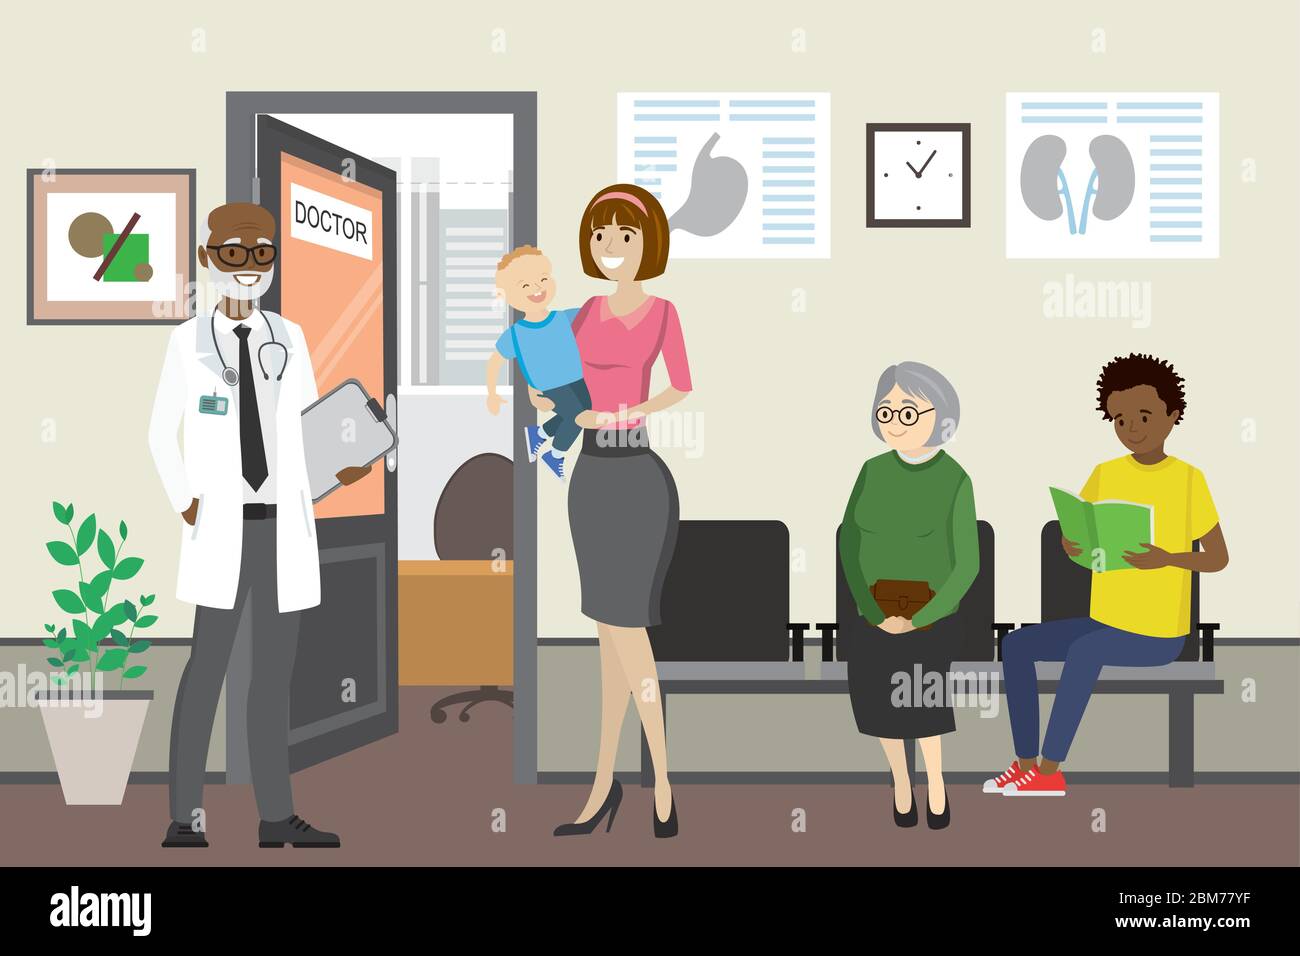 busy emergency room cartoon